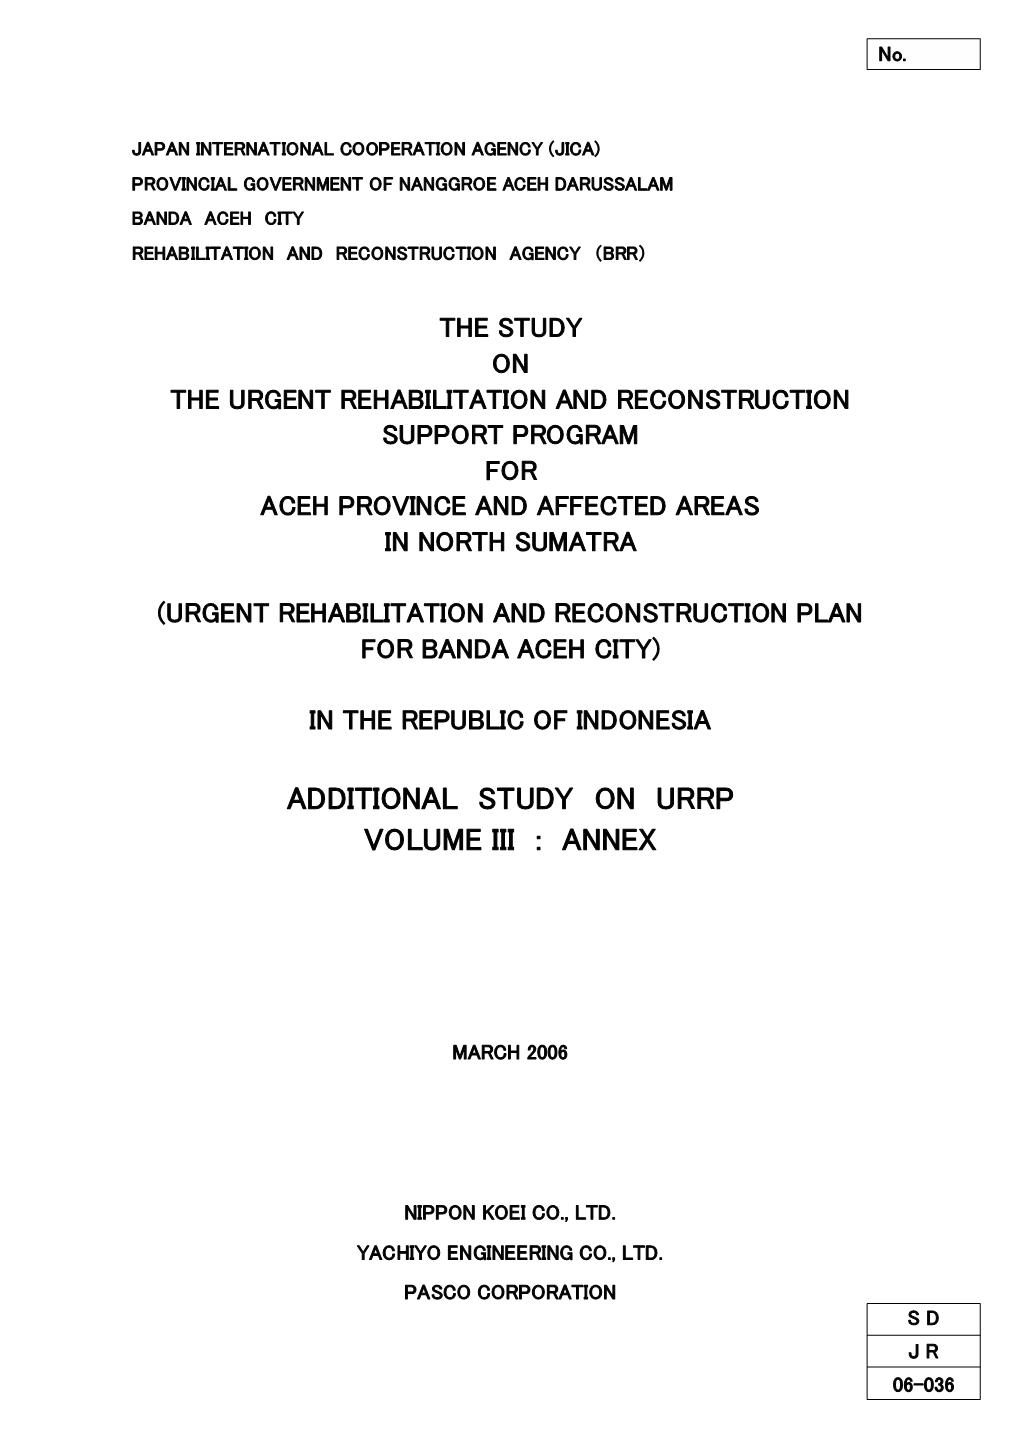 Additional Study on Urrp Volume Iii : Annex